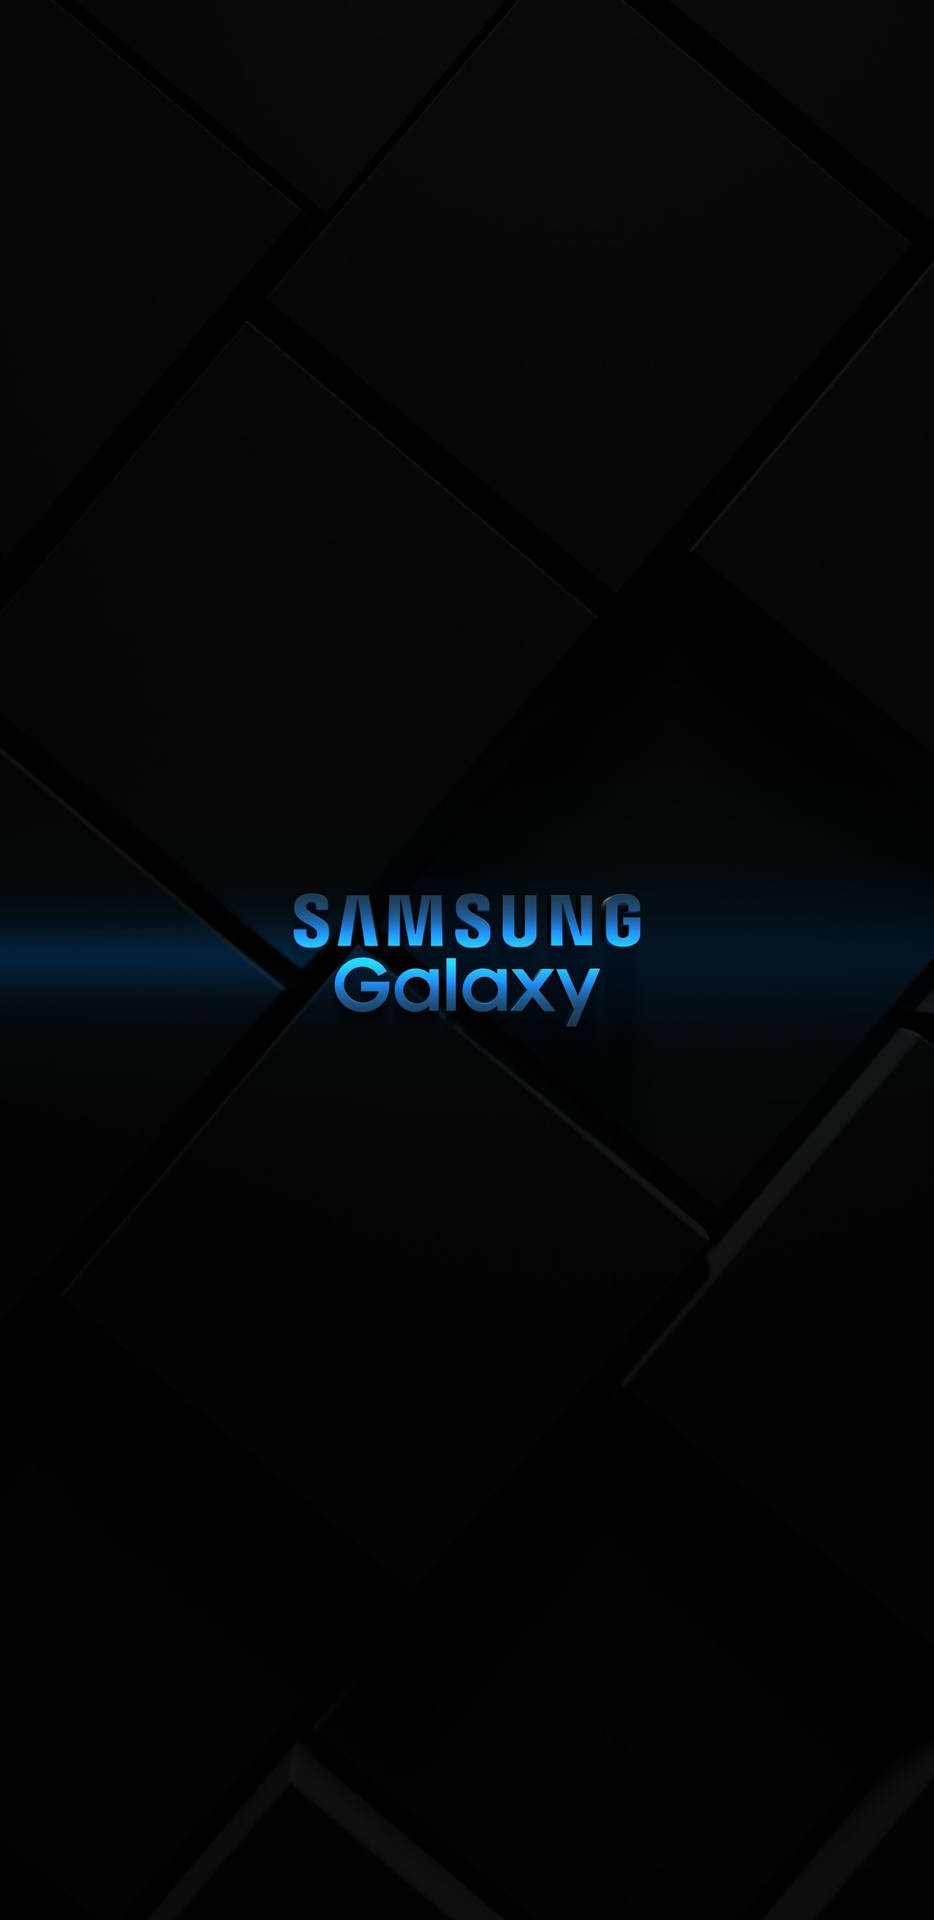 Samsung Galaxy Diamond Blue Light Background